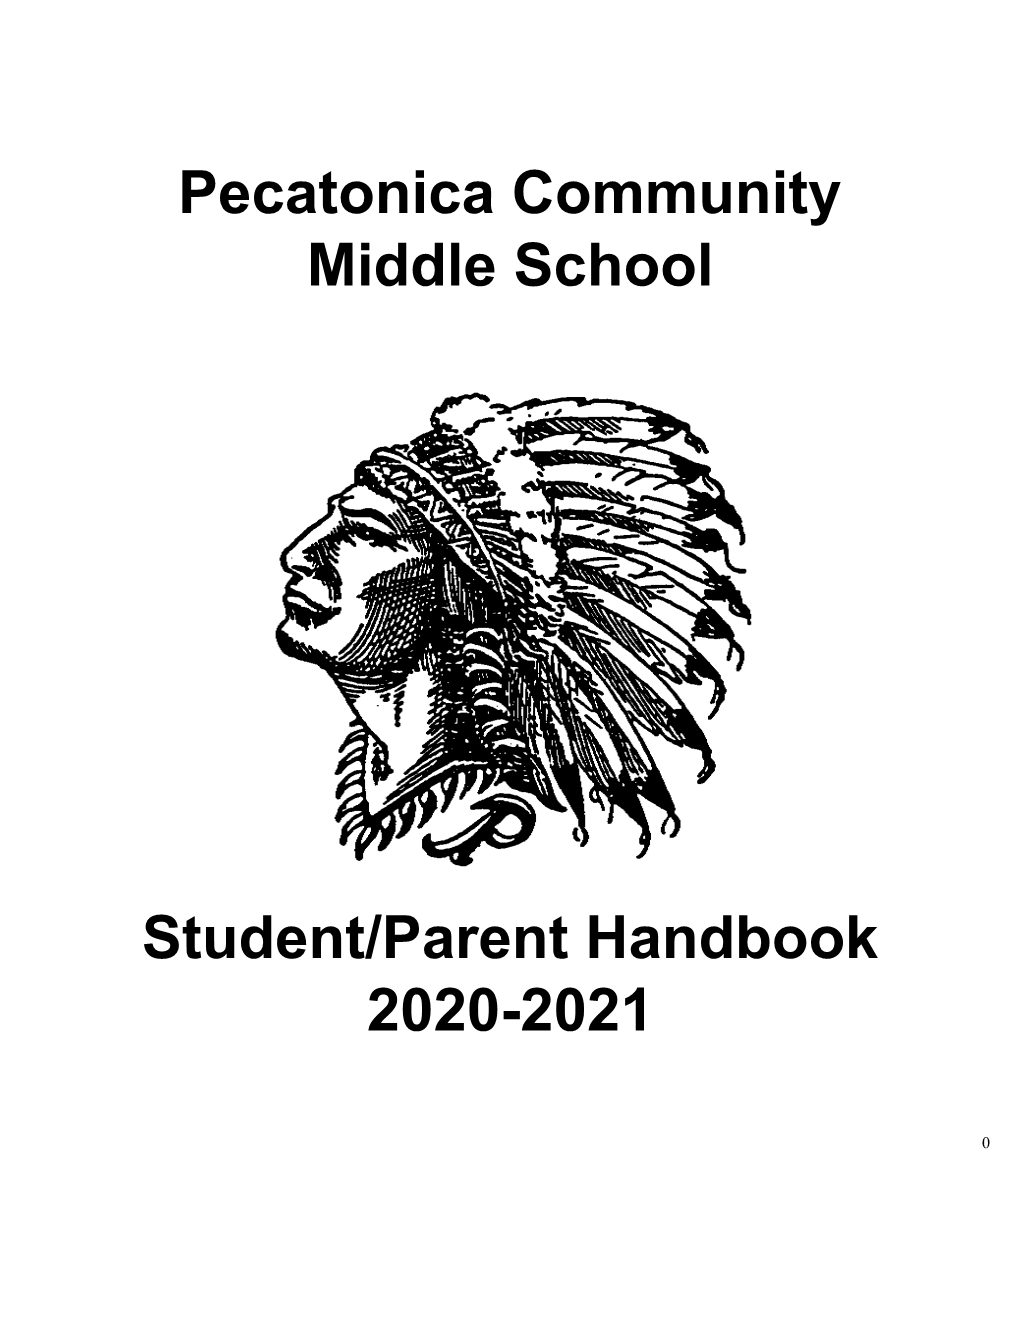 Pecatonica Community Middle School Student/Parent Handbook 2020